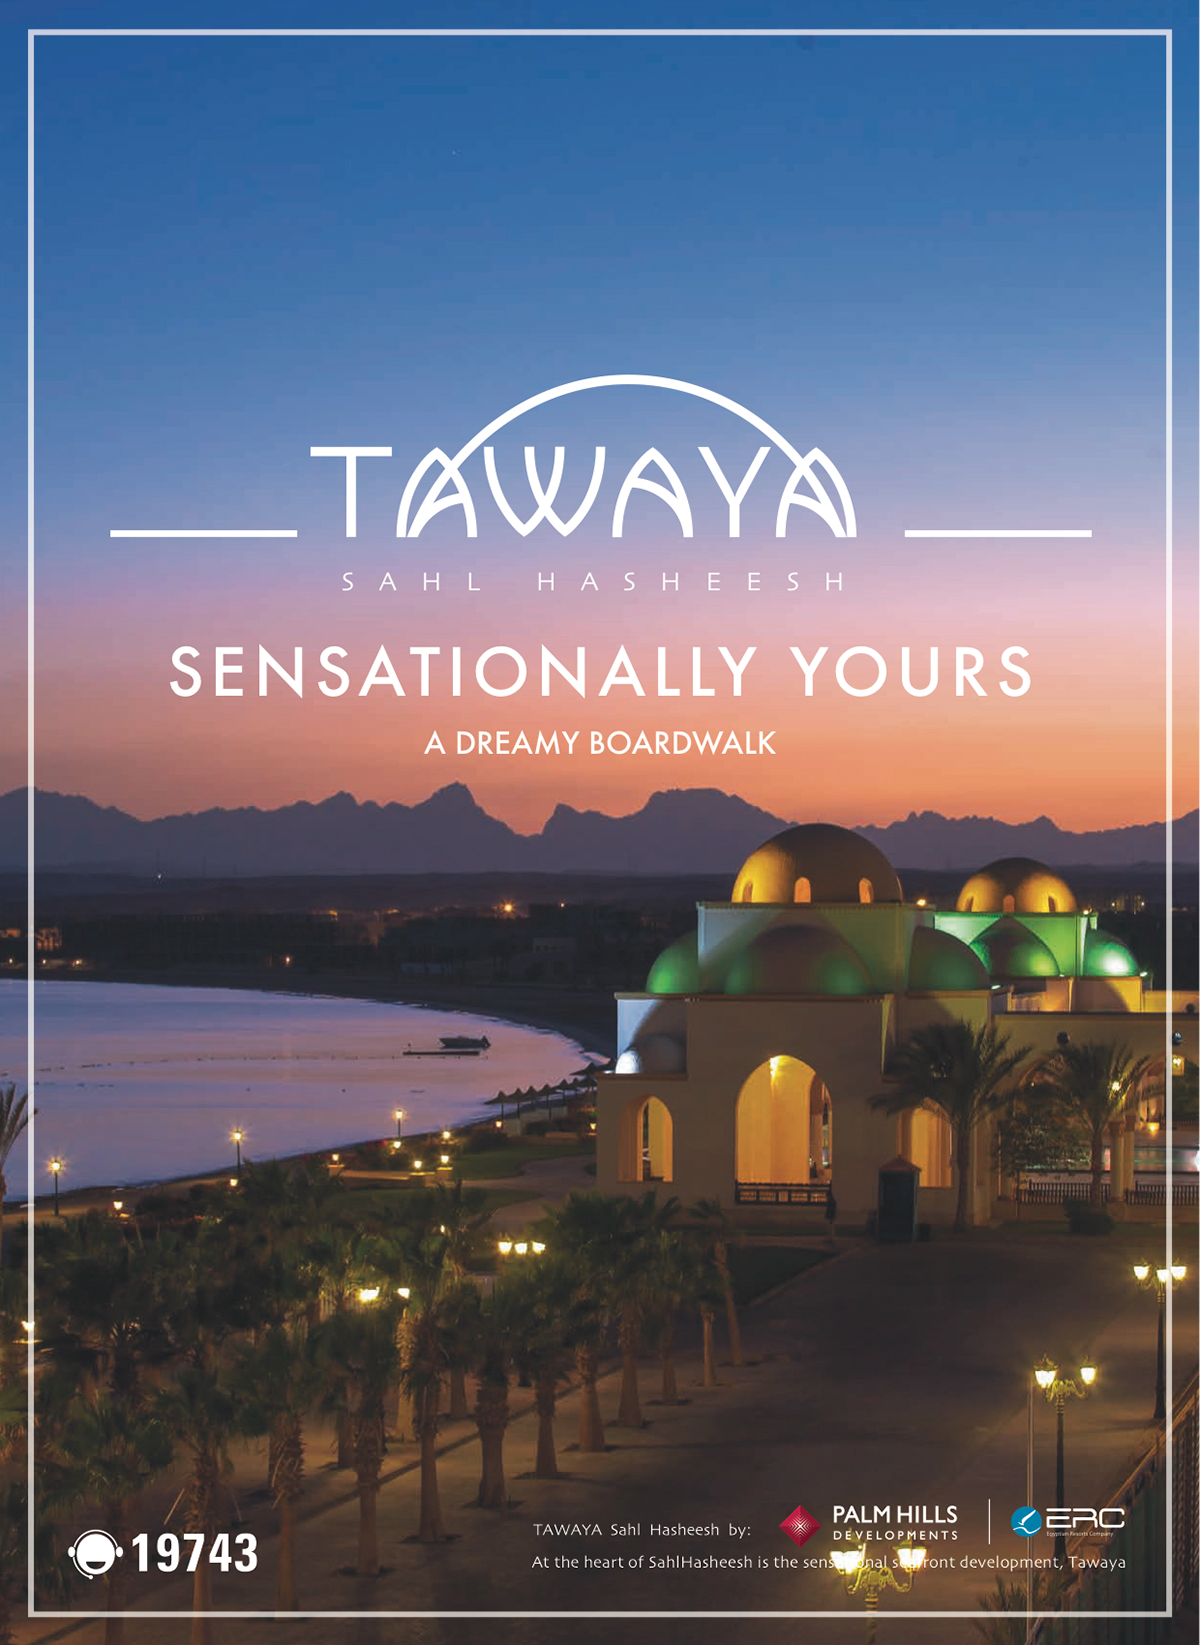 Tawaya hurghada FP7 egypt Travel campaign tourism Hospitality palmhills